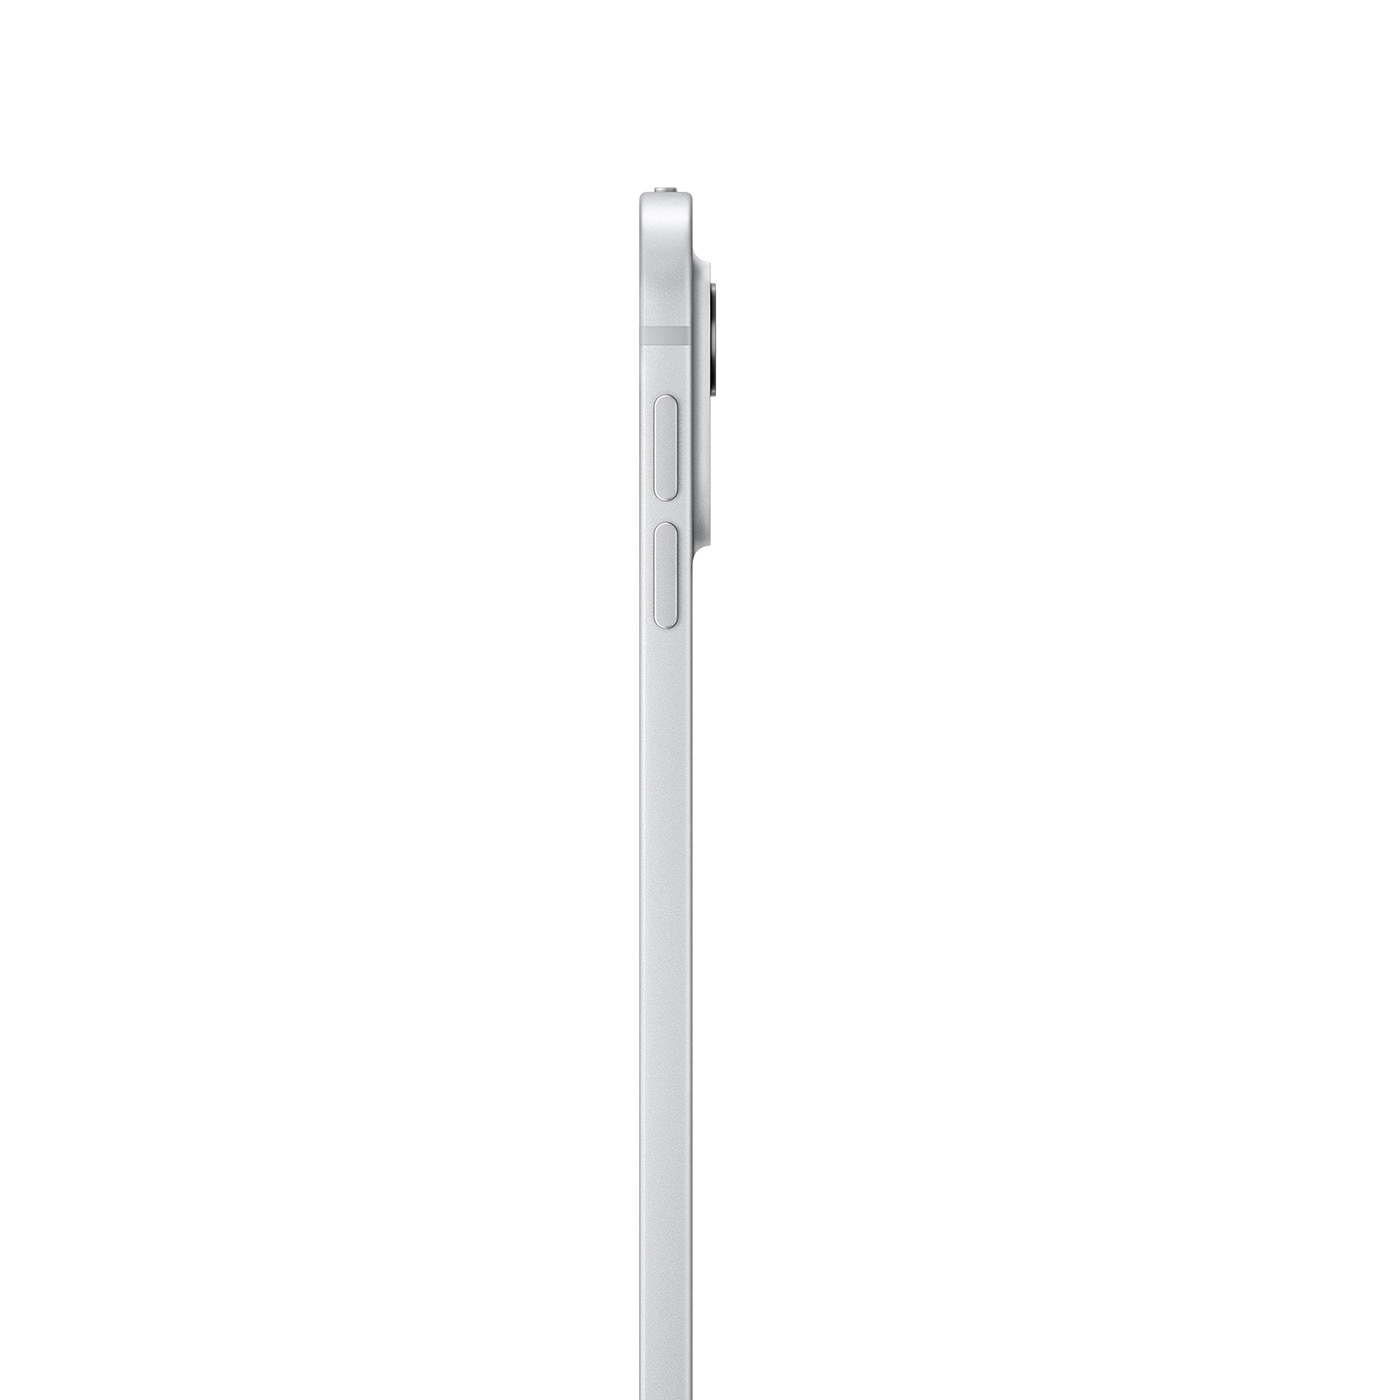 Apple 13 吋 iPad Pro Wi-Fi 512GB 配備標準玻璃 銀